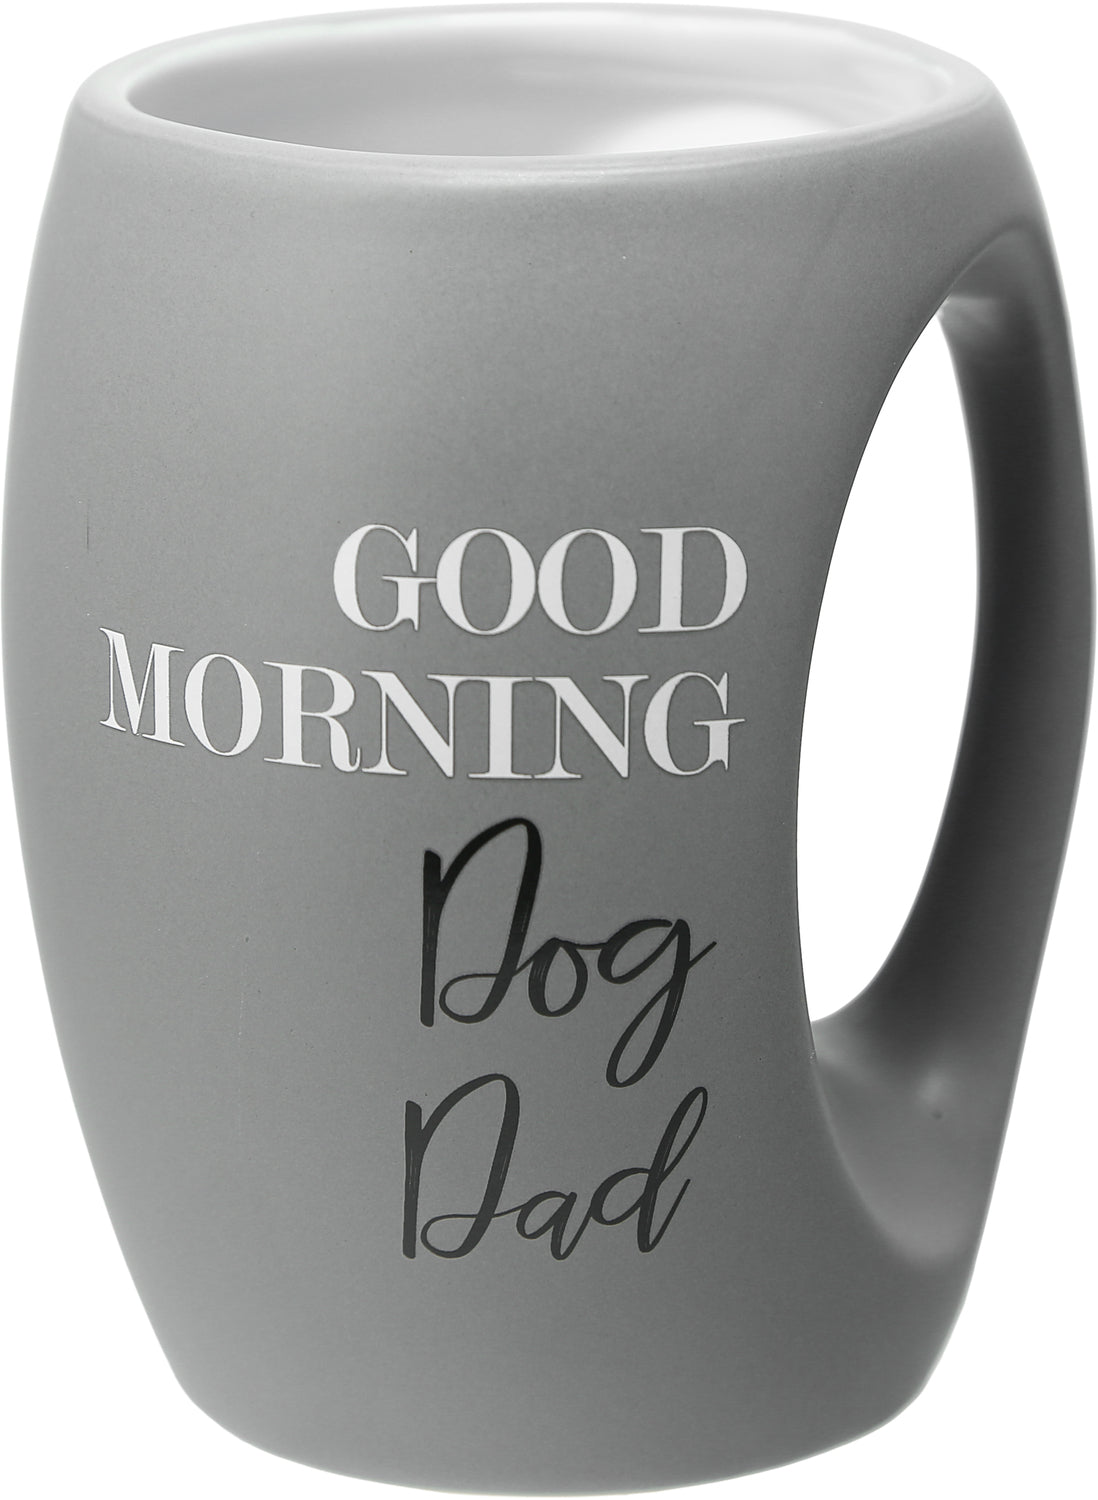 Good Morning Dog Mom or Dog Dad Mug or Cat Lady